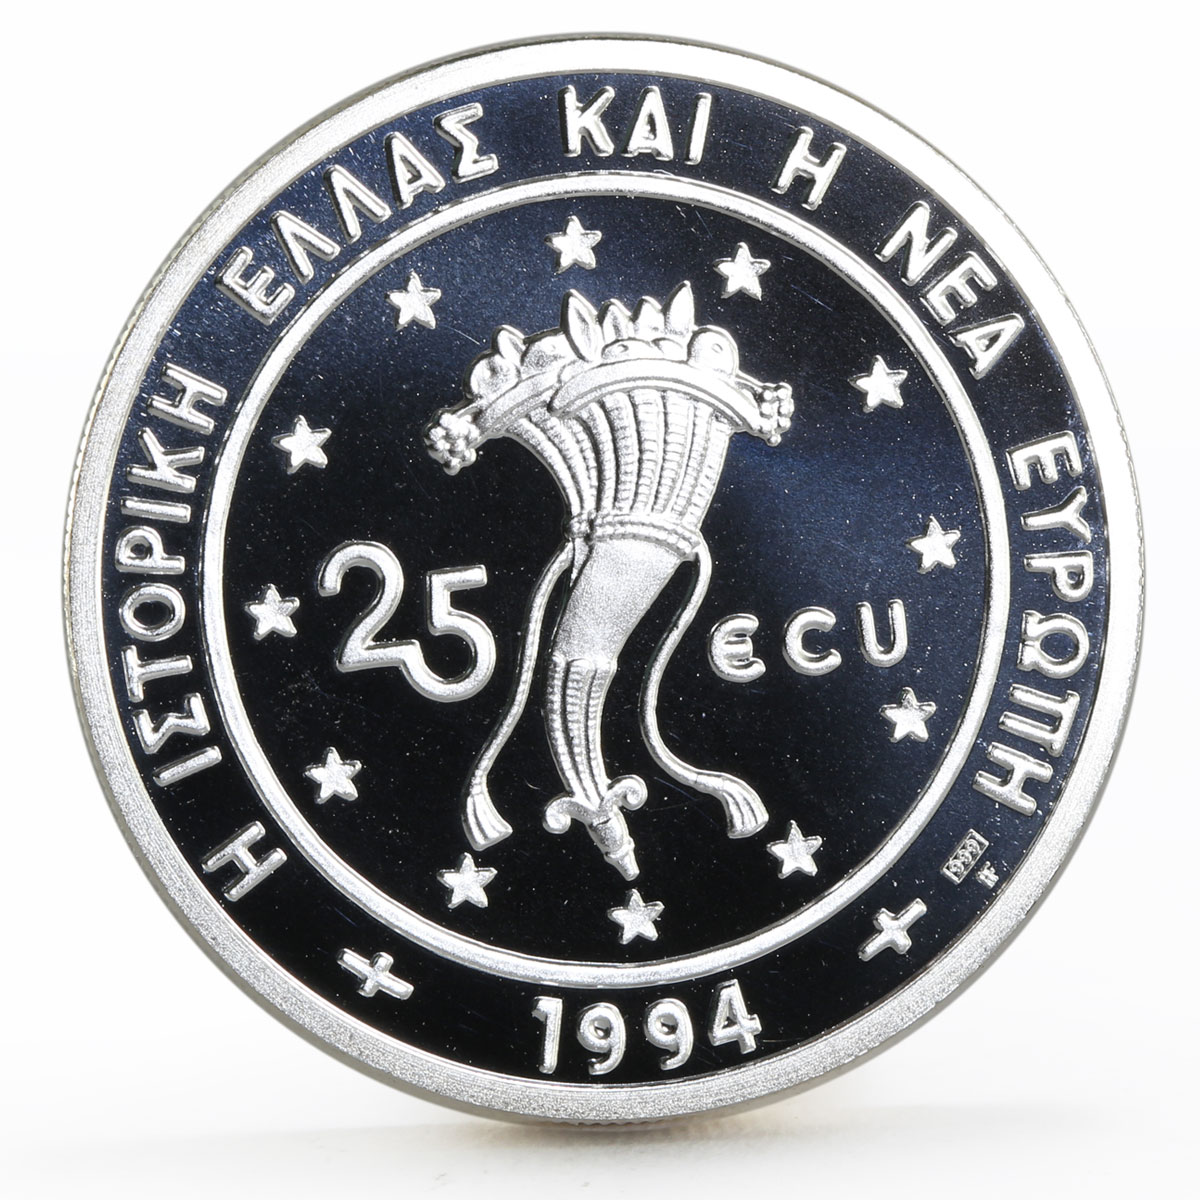 Greece 25 ecu Parthenon and a Woman proof silver coin 1994